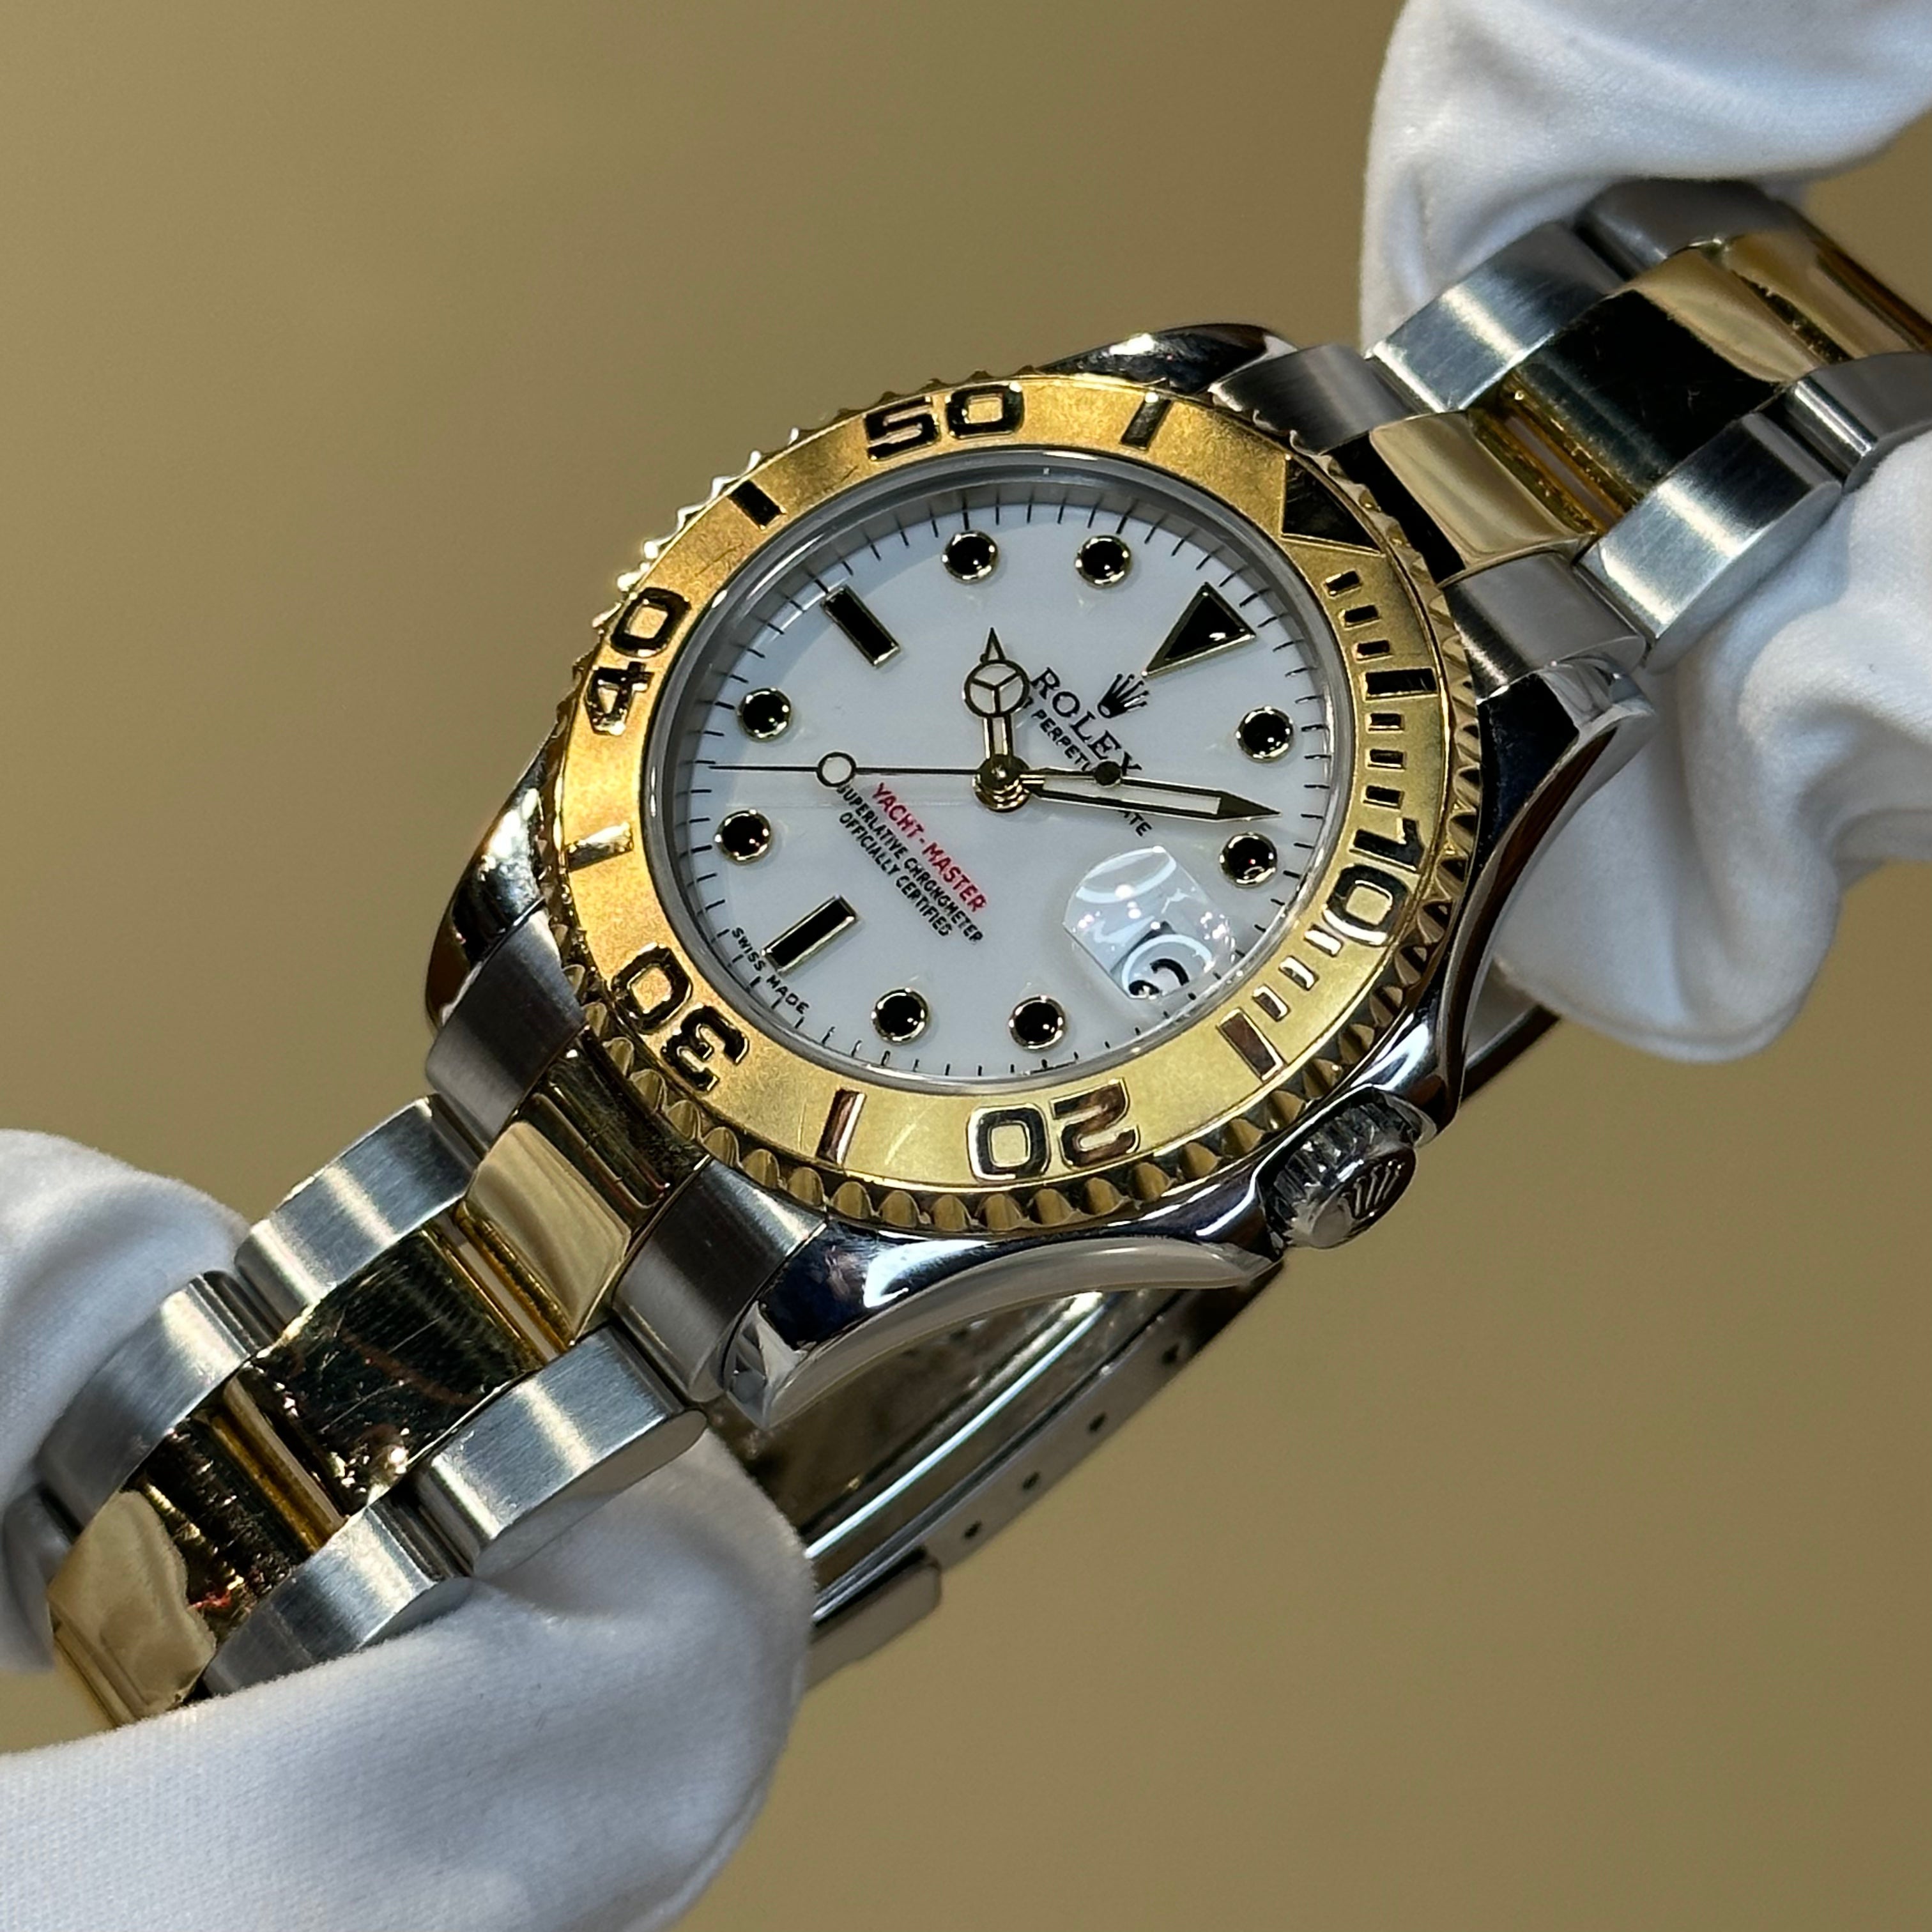 Rolex Yacht-master 35mm (on Hold) - Watch